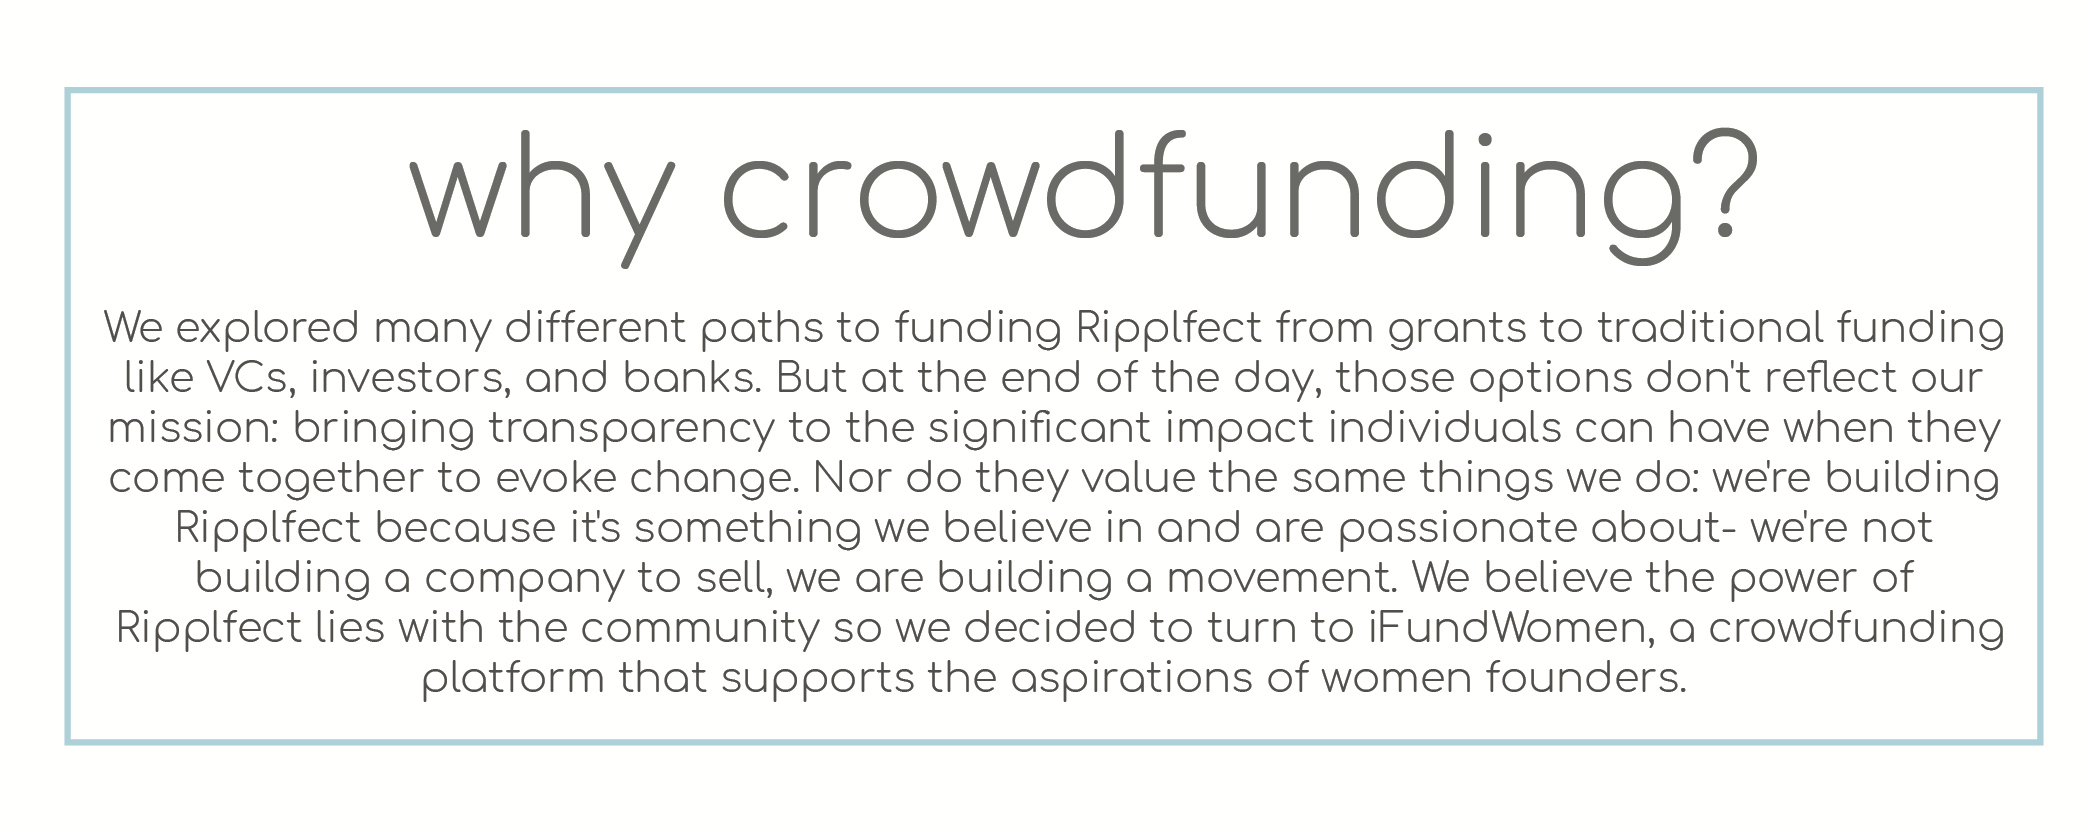 Crowdfunding 4